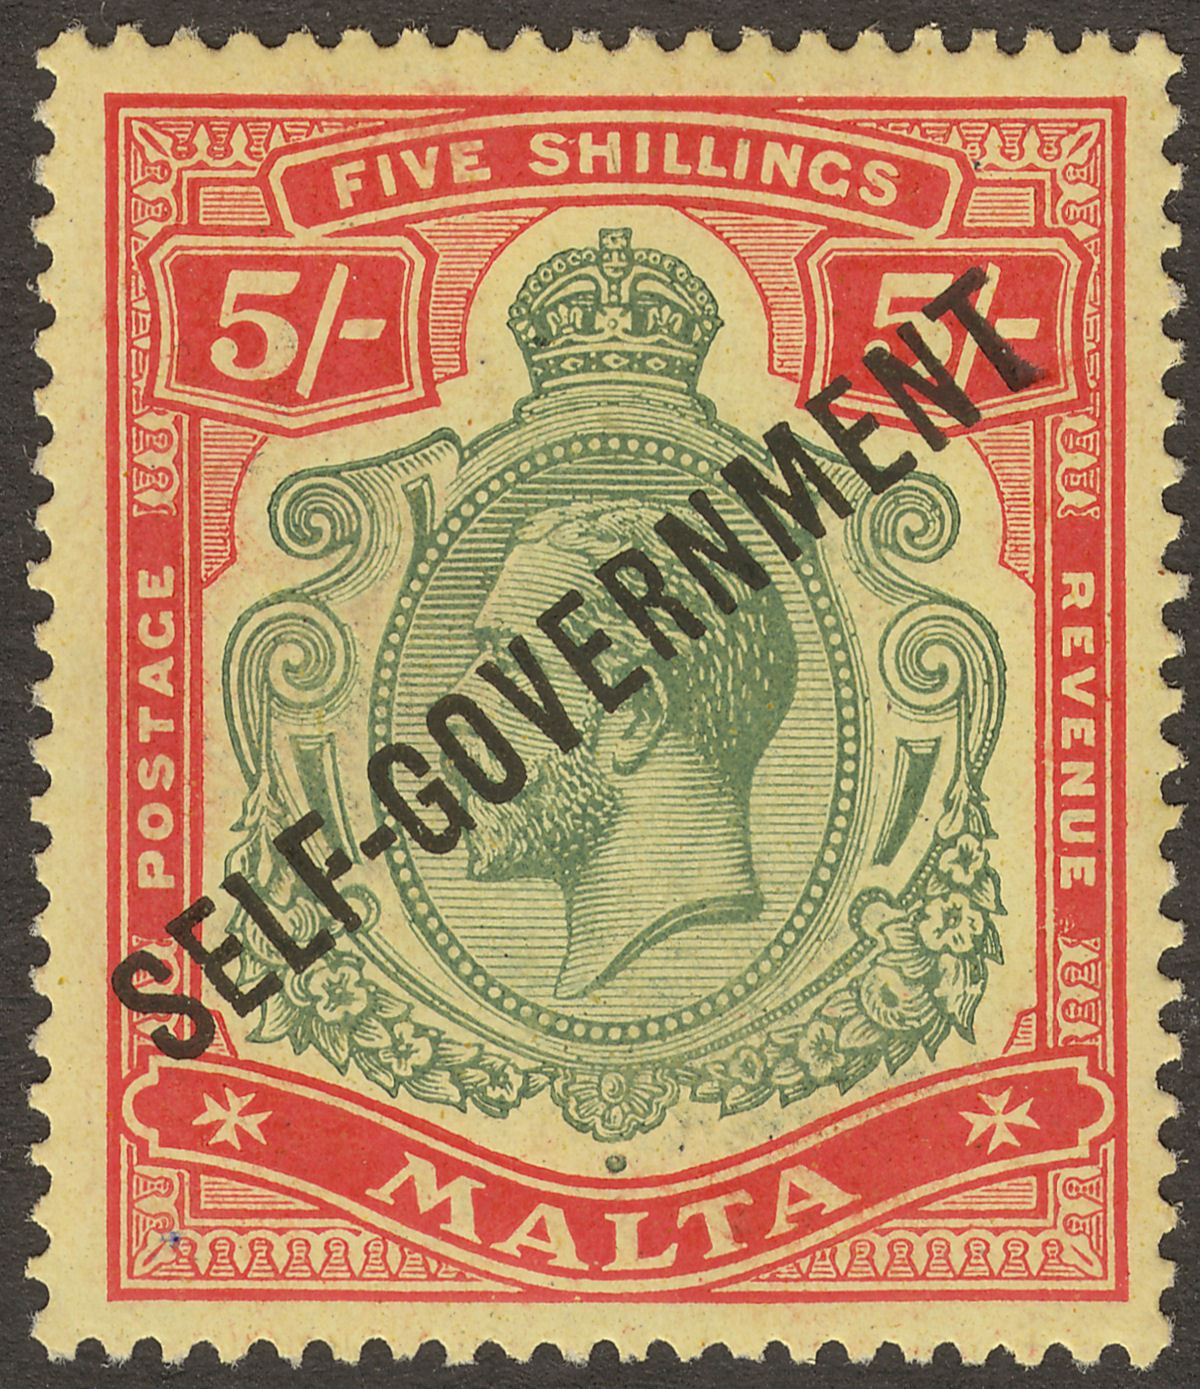 Malta 1922 KGV 5sh Self-Govt Overprint Damaged Leaf Variety Mint SG113f cat £475